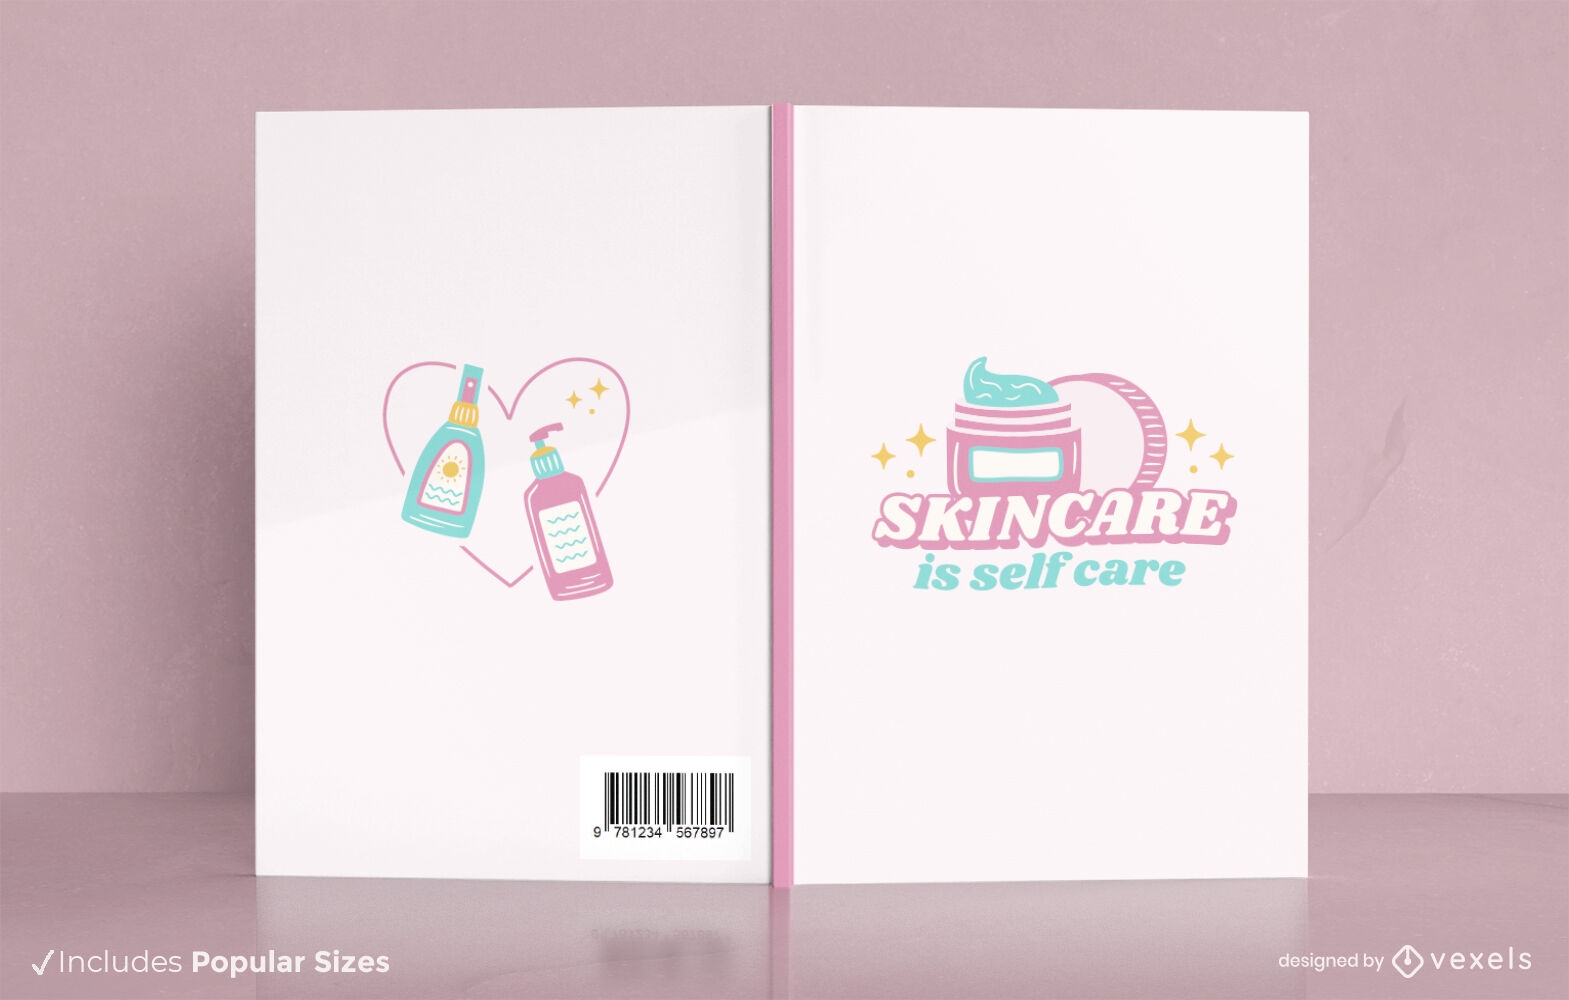 Skincare is selfcare book cover design